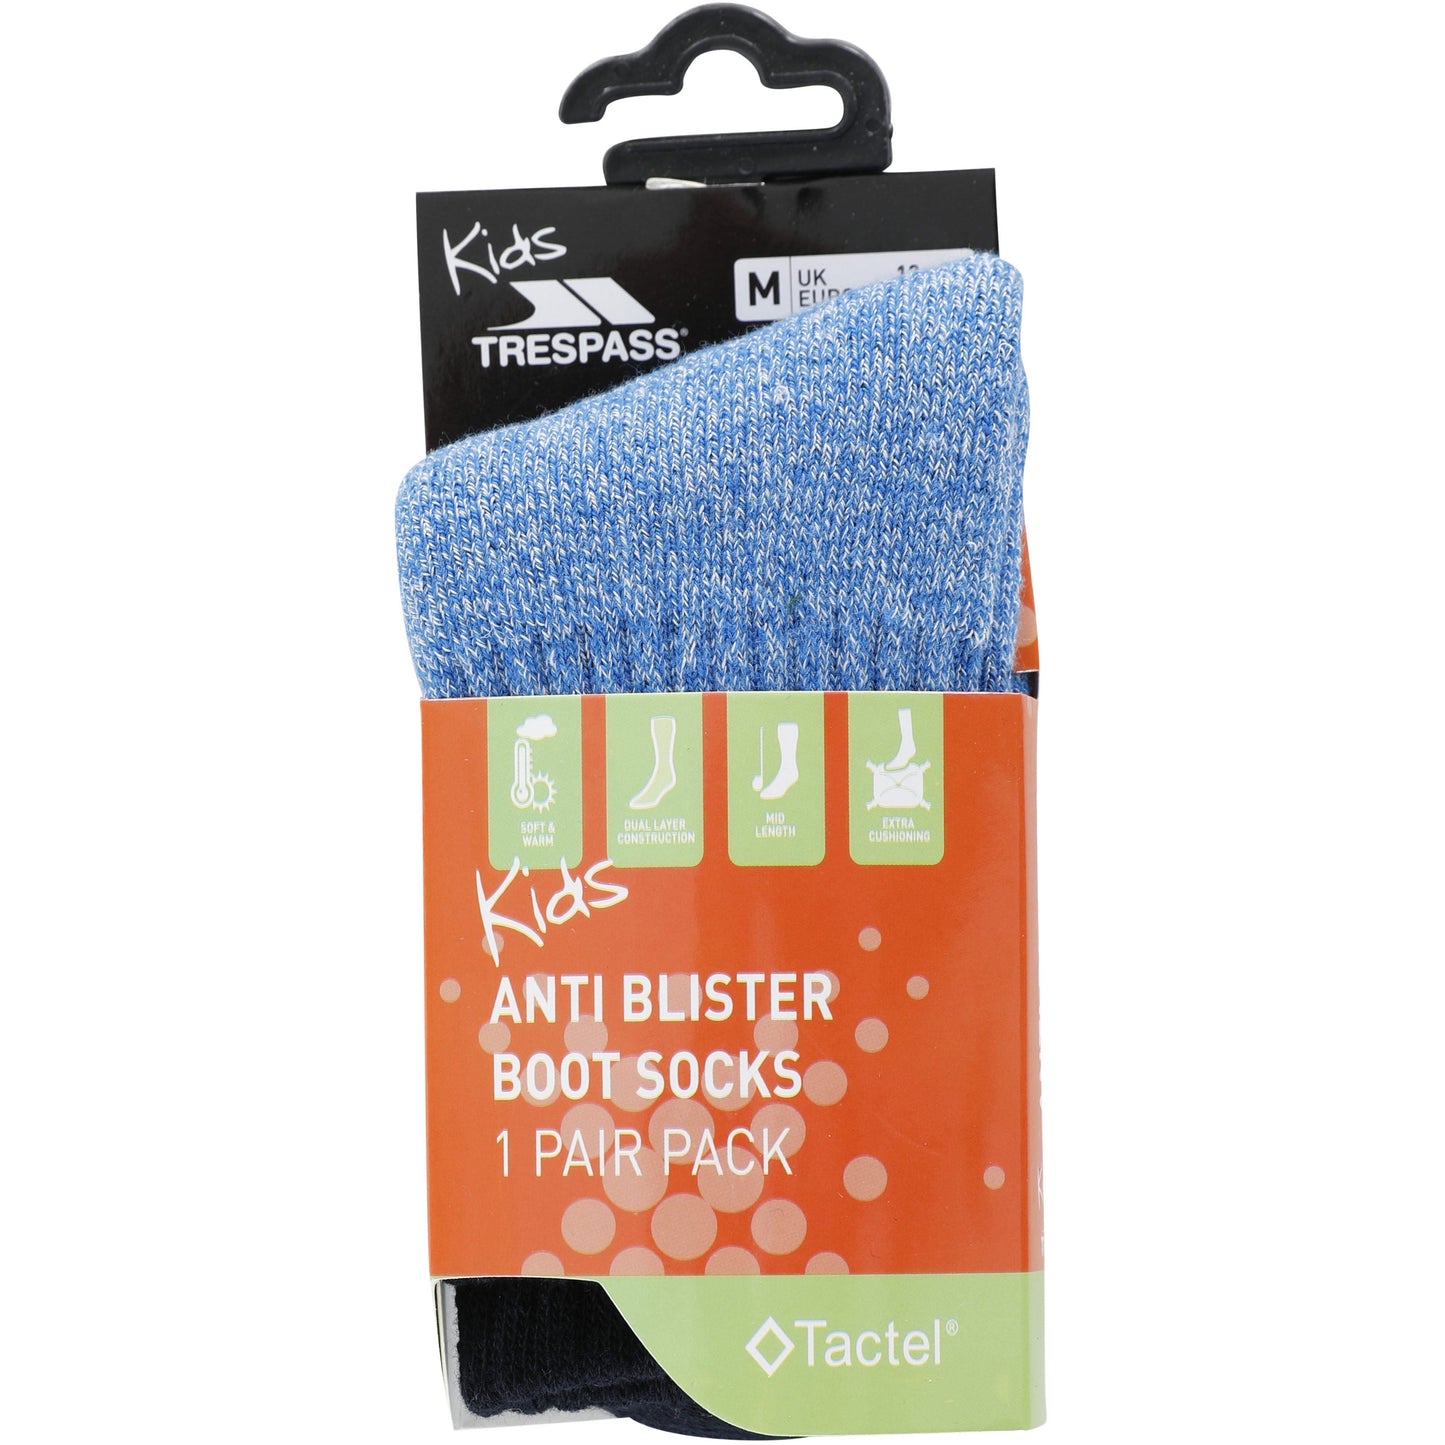 Vic Kids Anti Blister Socks - Bright Blue Marl